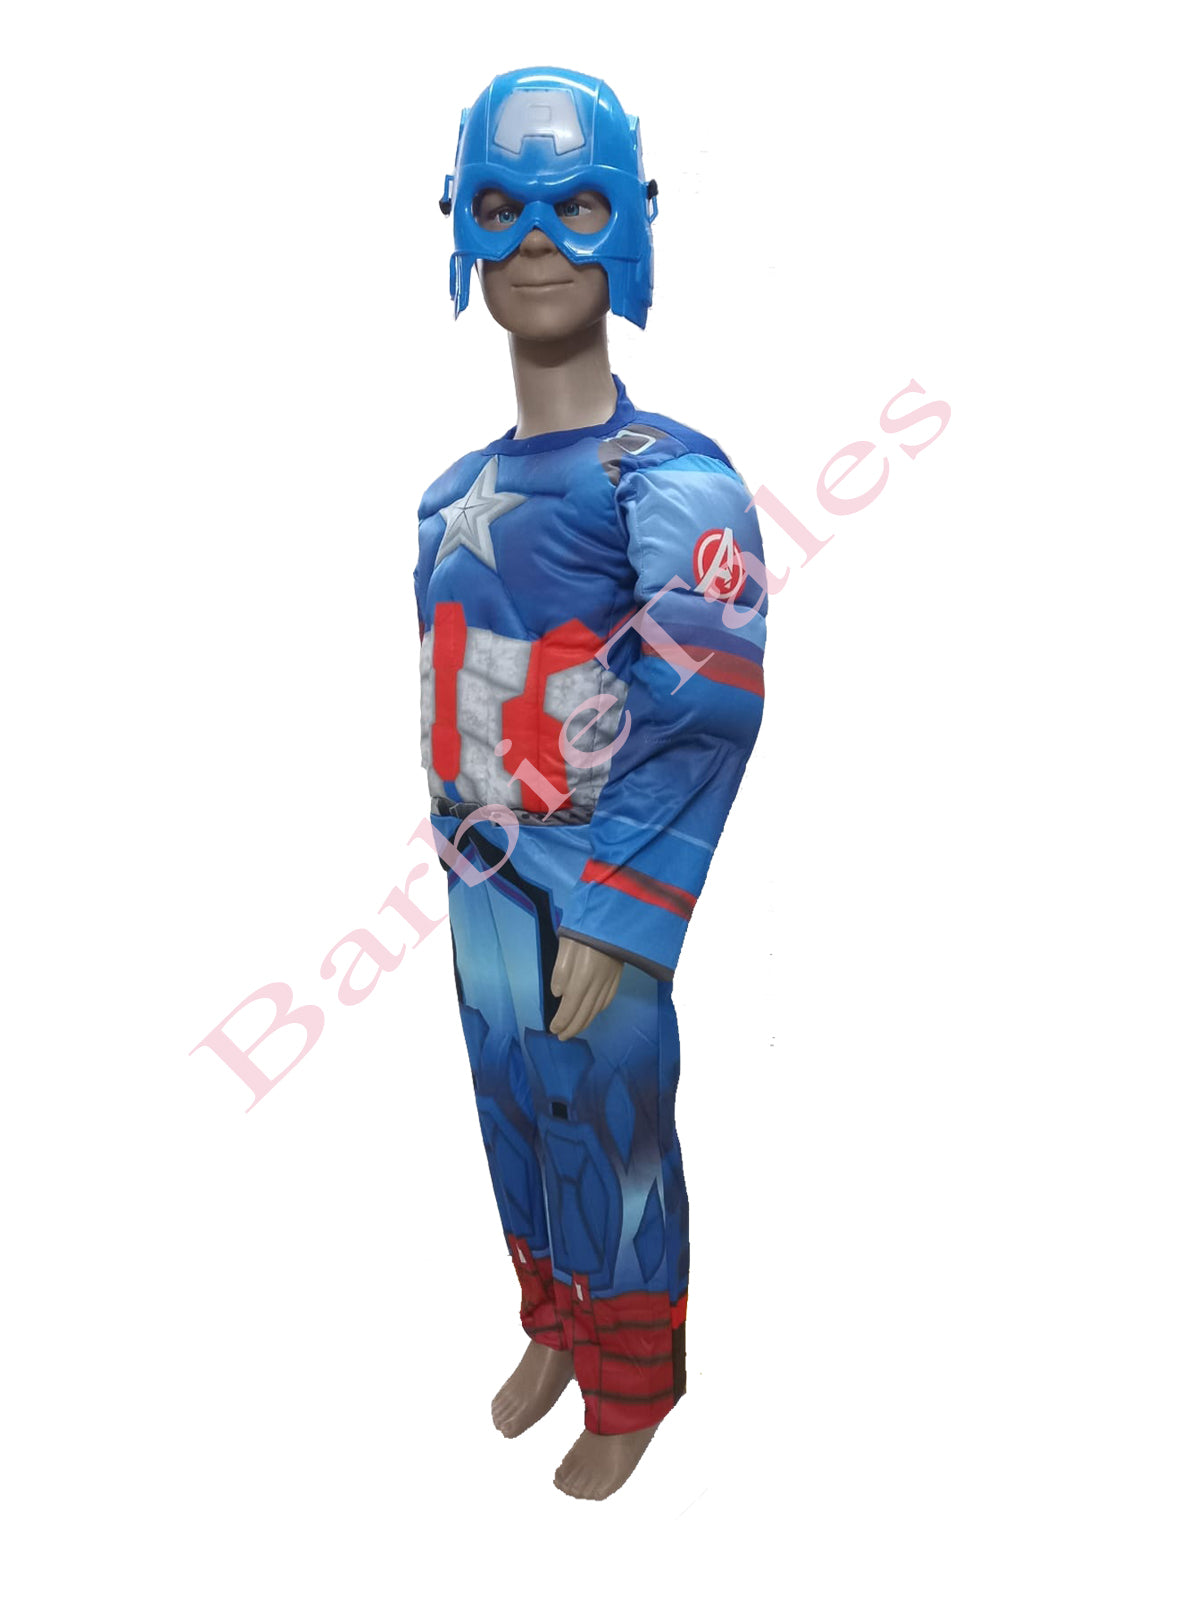 Chris Evans' Captain America Suit Could Provide Clue to 'Avengers 4' Story  Line: Photo 4012656 | Chris Evans, Paul Rudd, Robert Downey Jr Photos |  Just Jared: Entertainment News